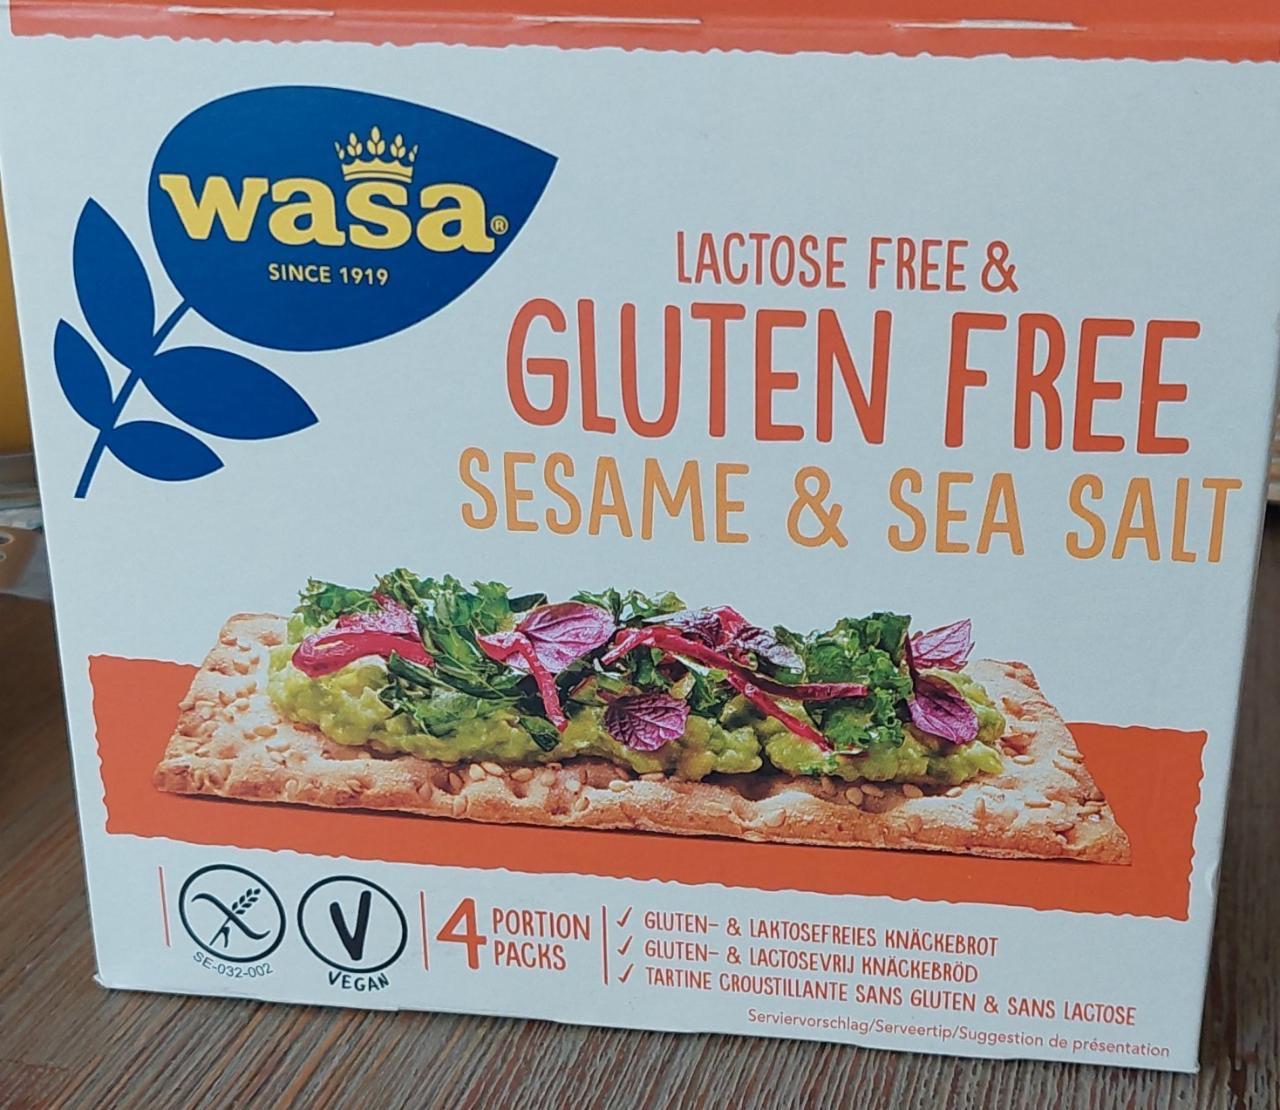 Képek - Gluten free & lactose free sesame & sea salt Wasa